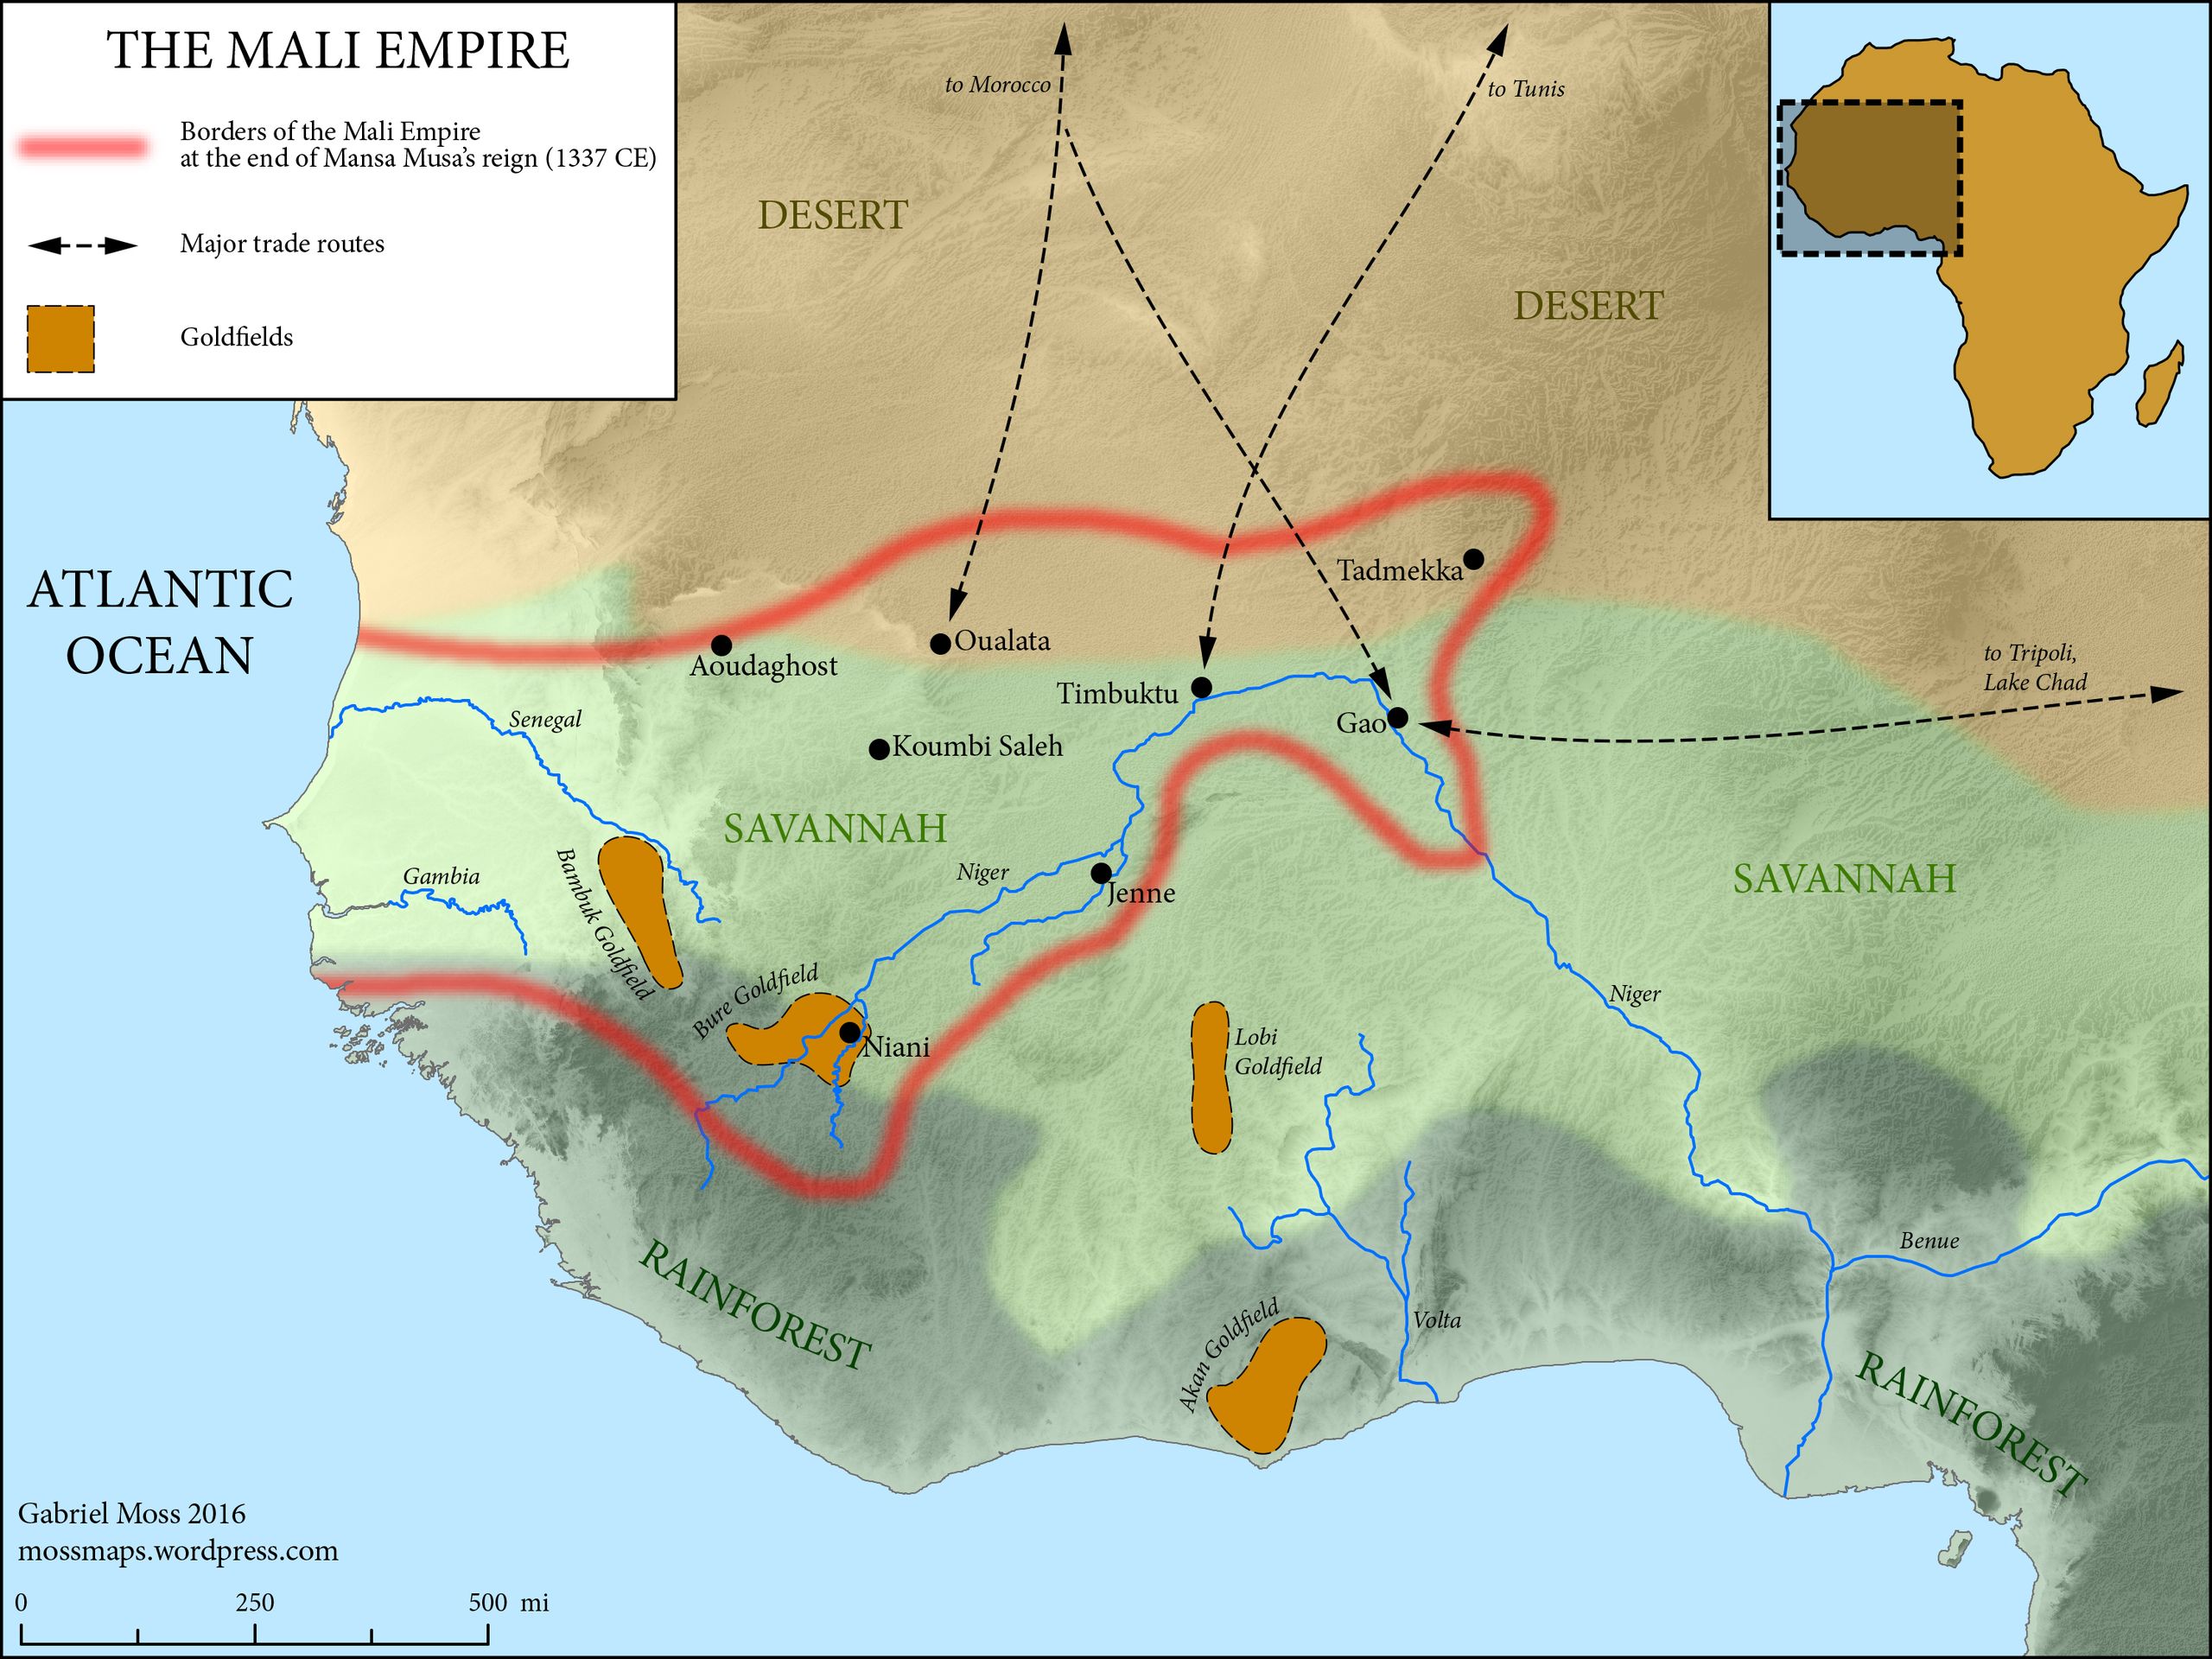 a map of the Mali empire.